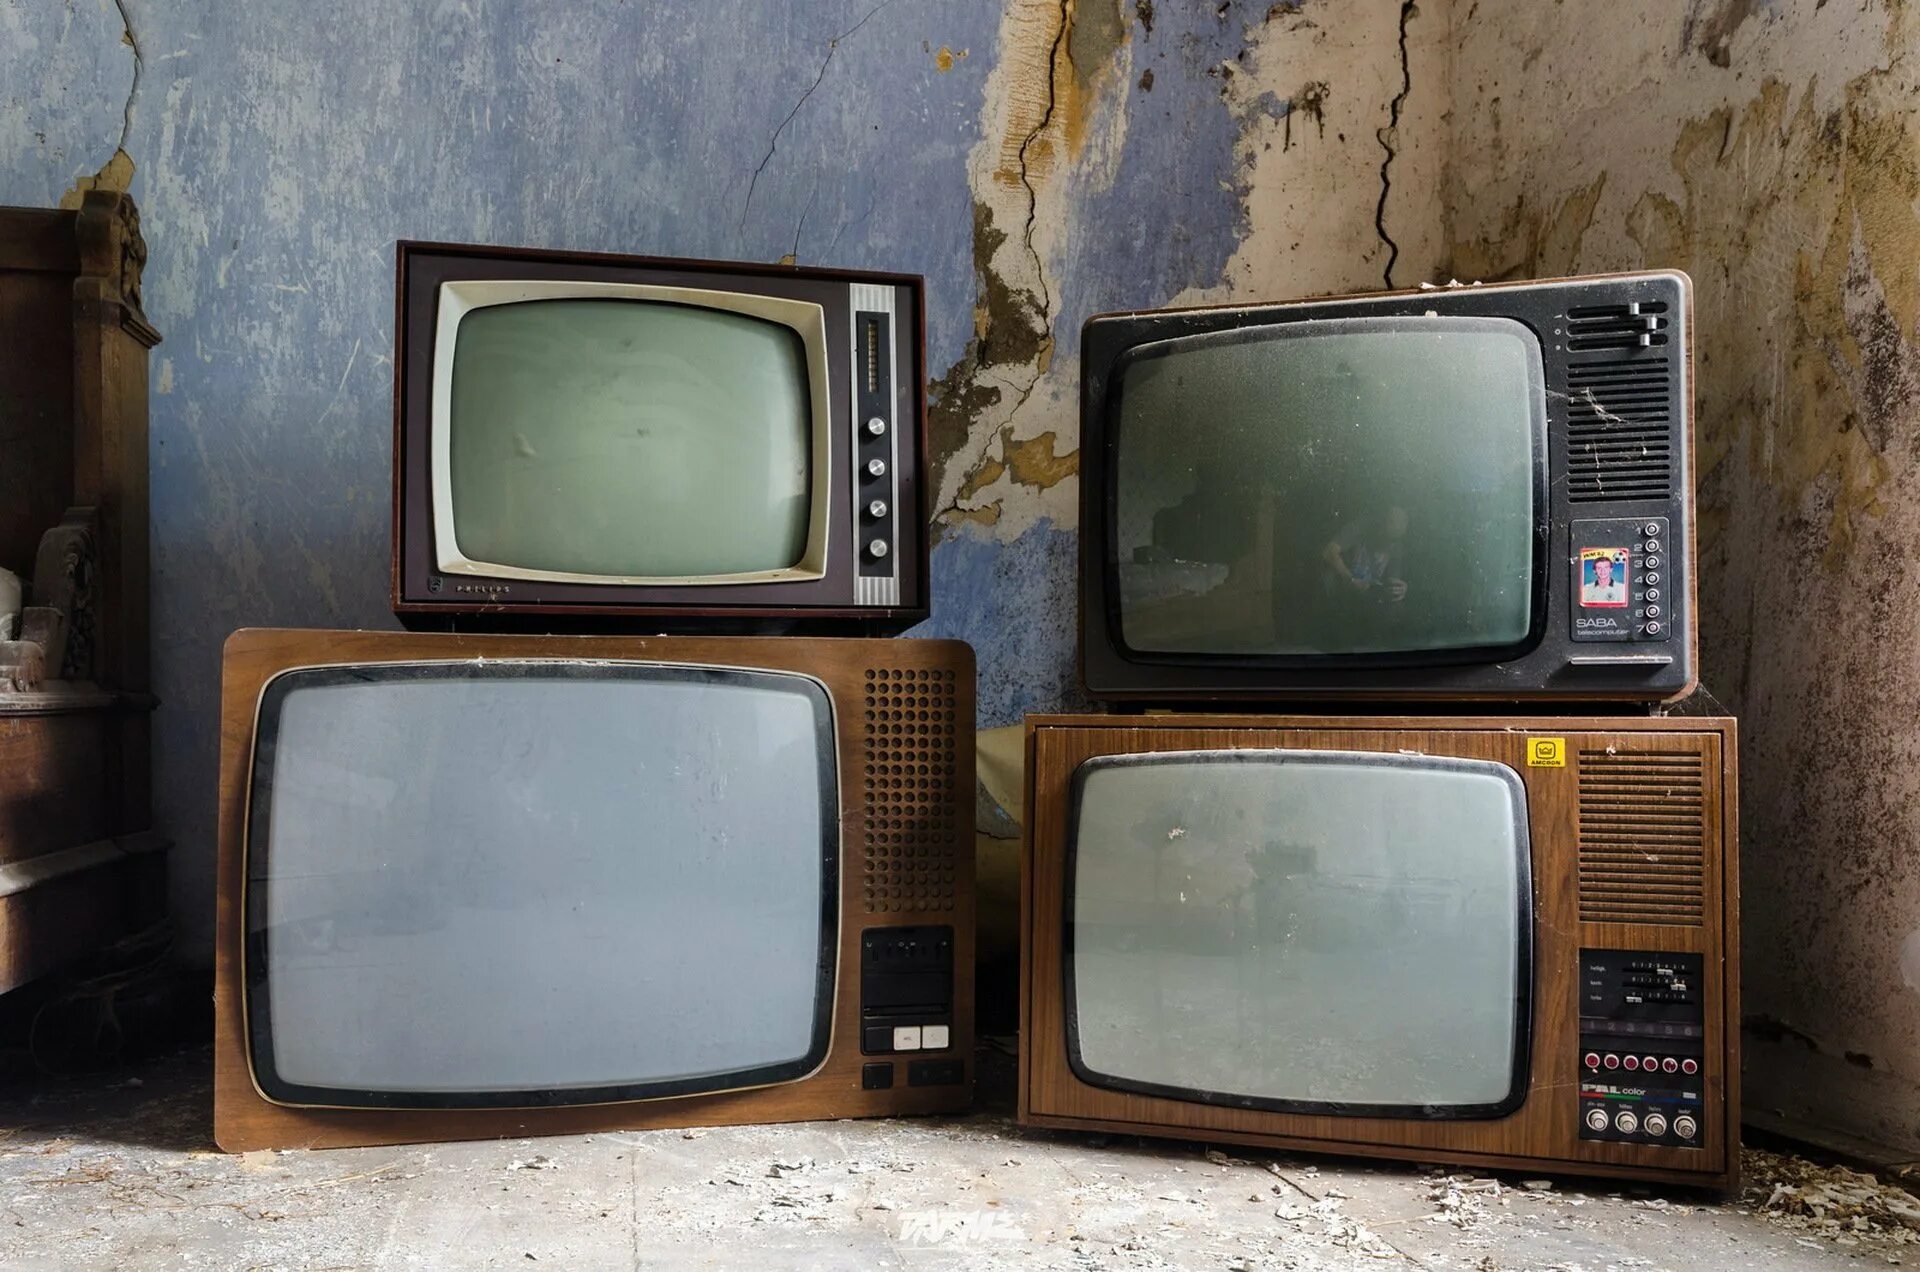 Куплю телевизор старый оскол. Старый телевизор. Старинный телевизор. Советский телевизор. Древние телевизоры.